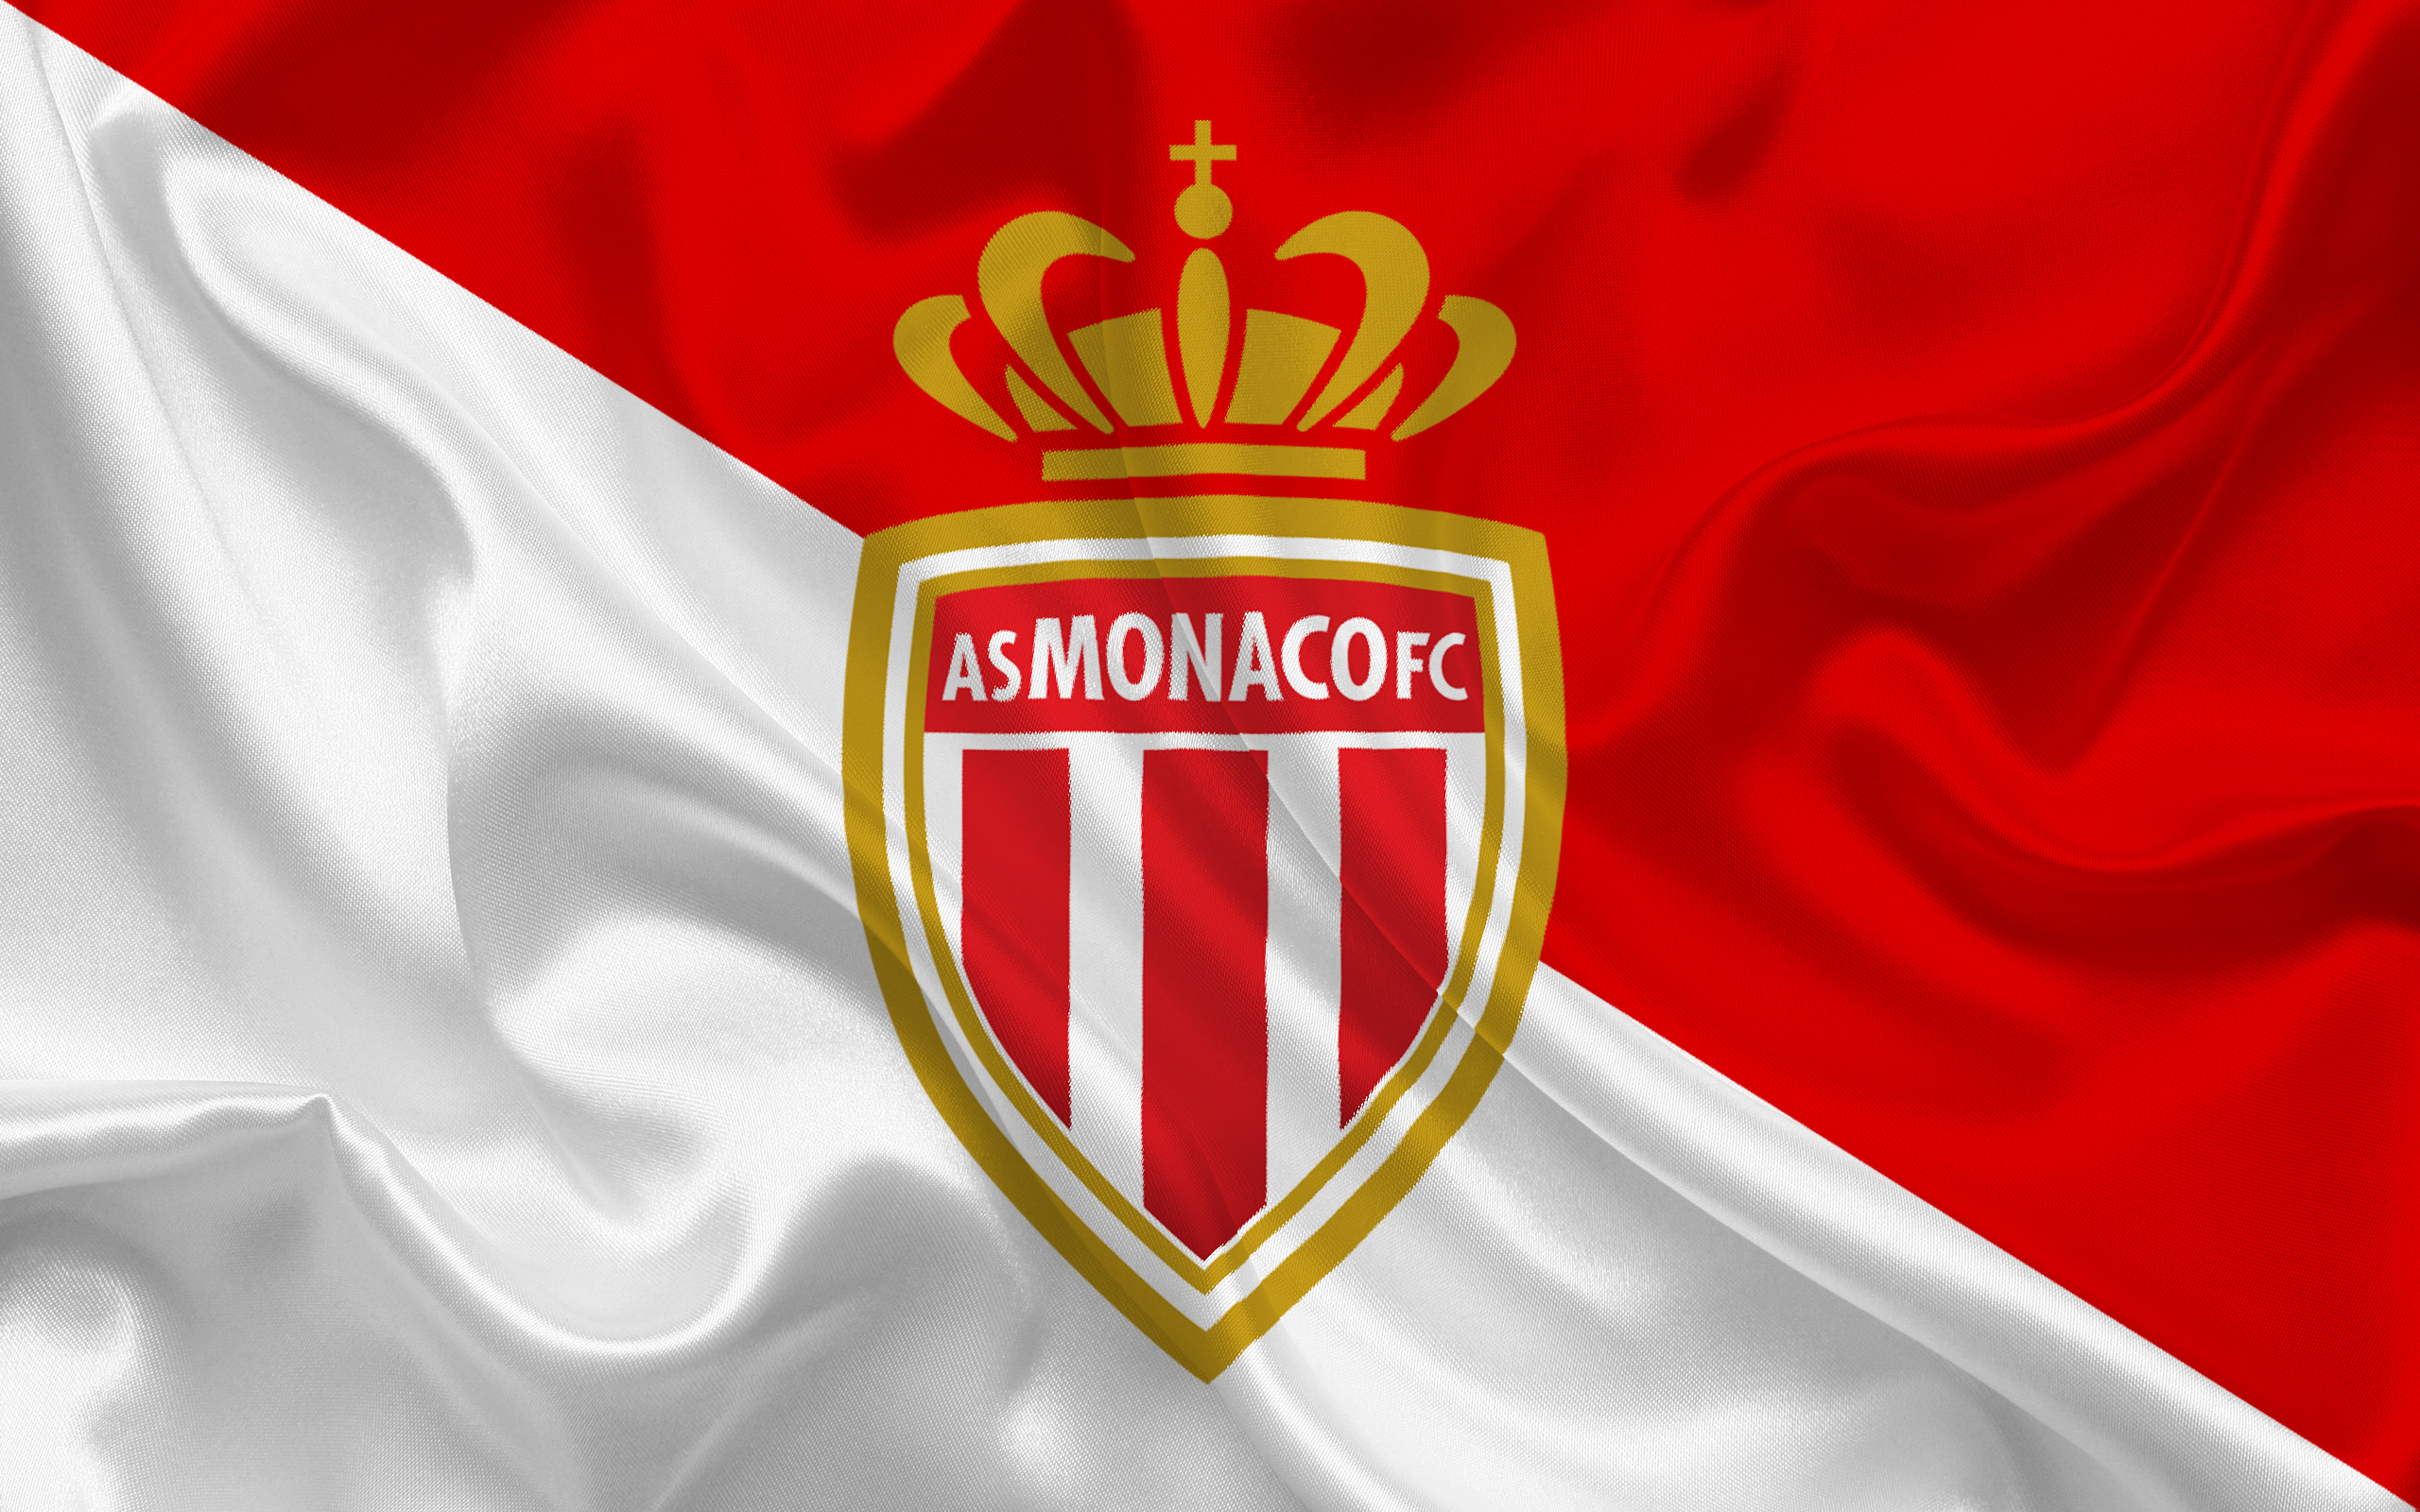 As Monaco Fc - AS Monaco FC, an official partner of the SPORTEL Awards ...